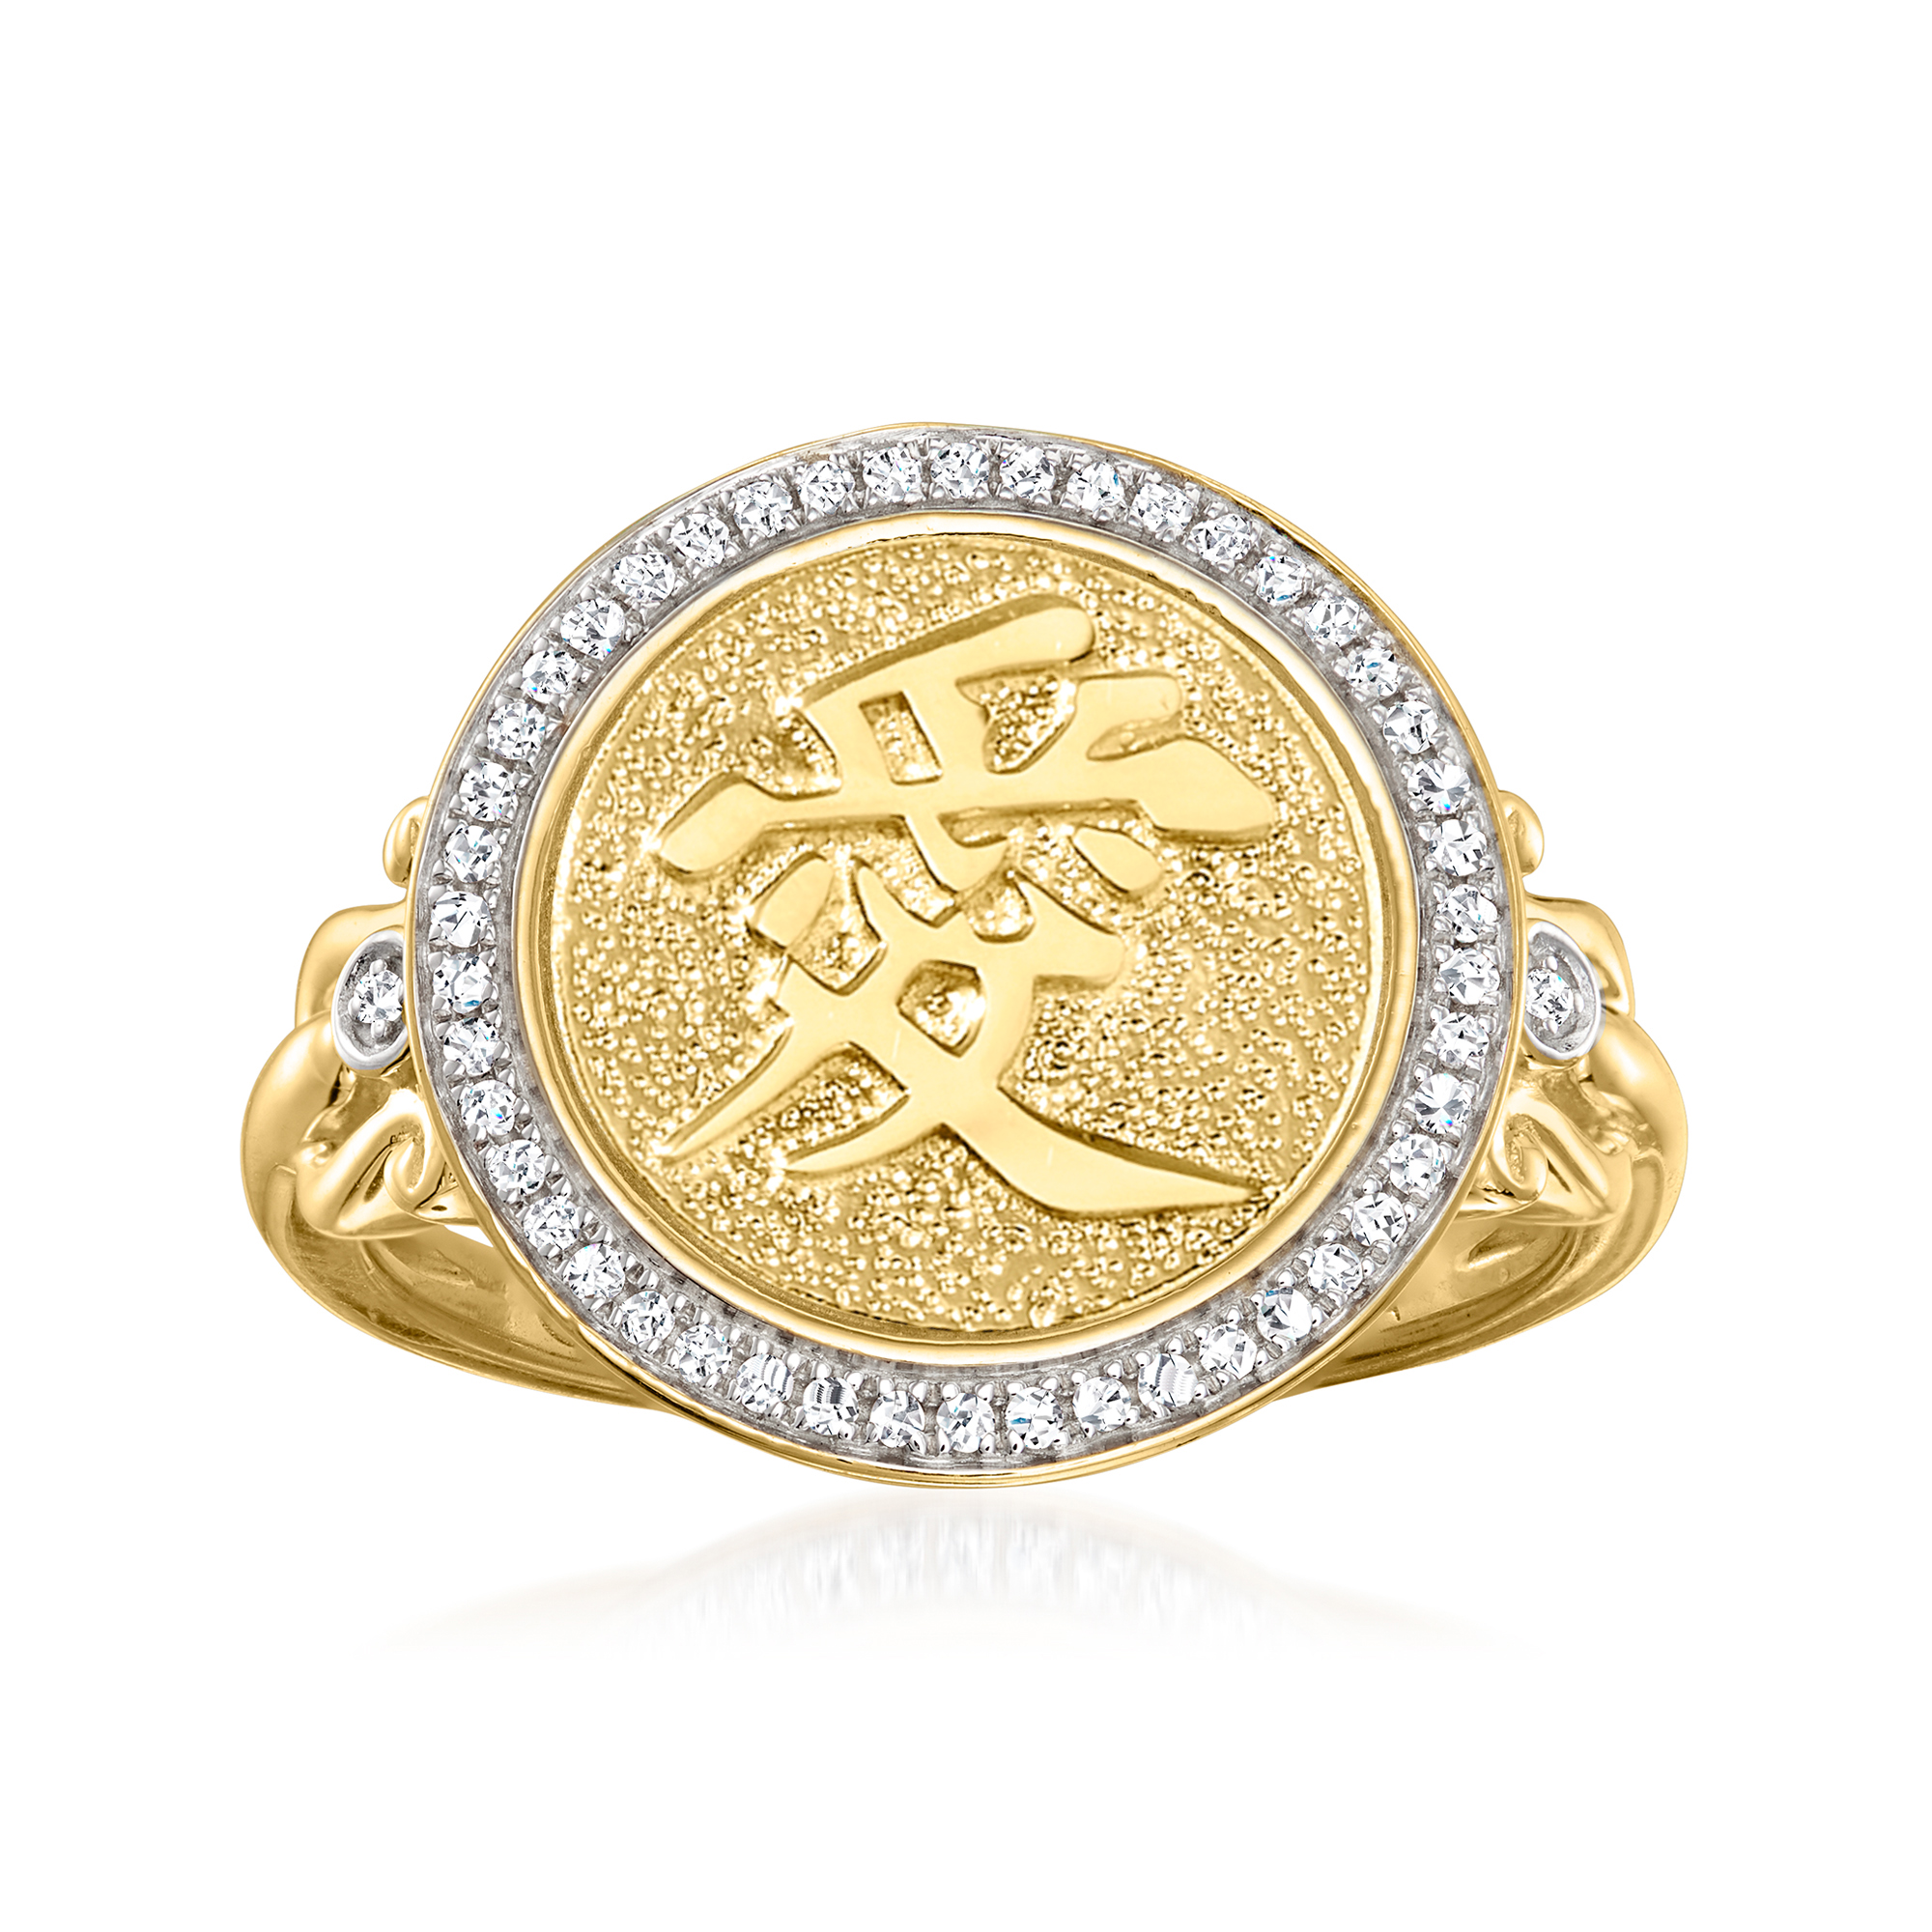 10 ct. t.w. Diamond "Love" Ring in 18kt Gold Over Sterling | Ross-Simons